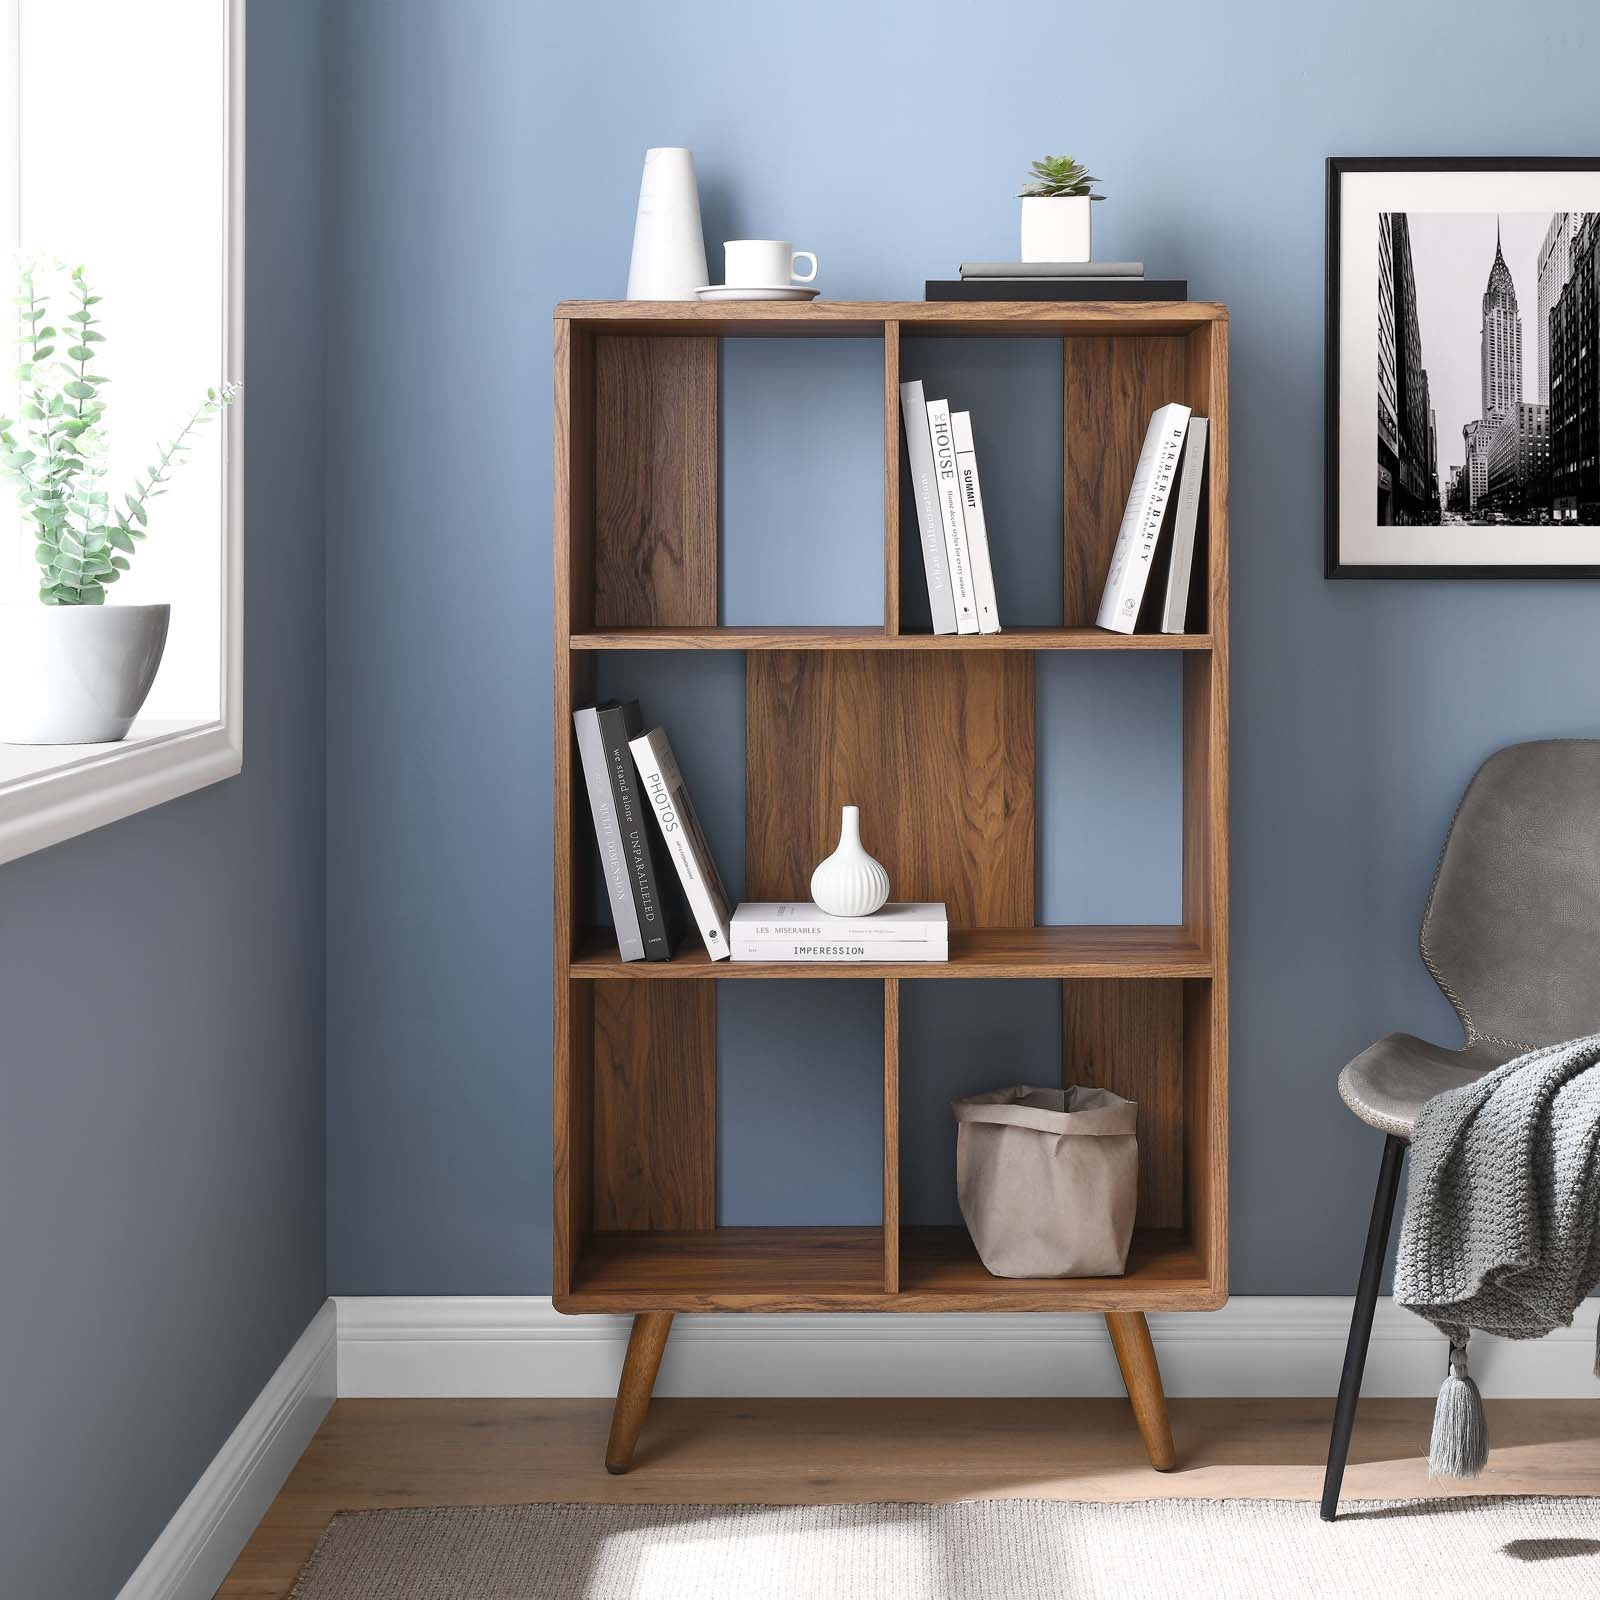 Transmit 5 Shelf Wood Grain Bookcase - East Shore Modern Home Furnishings